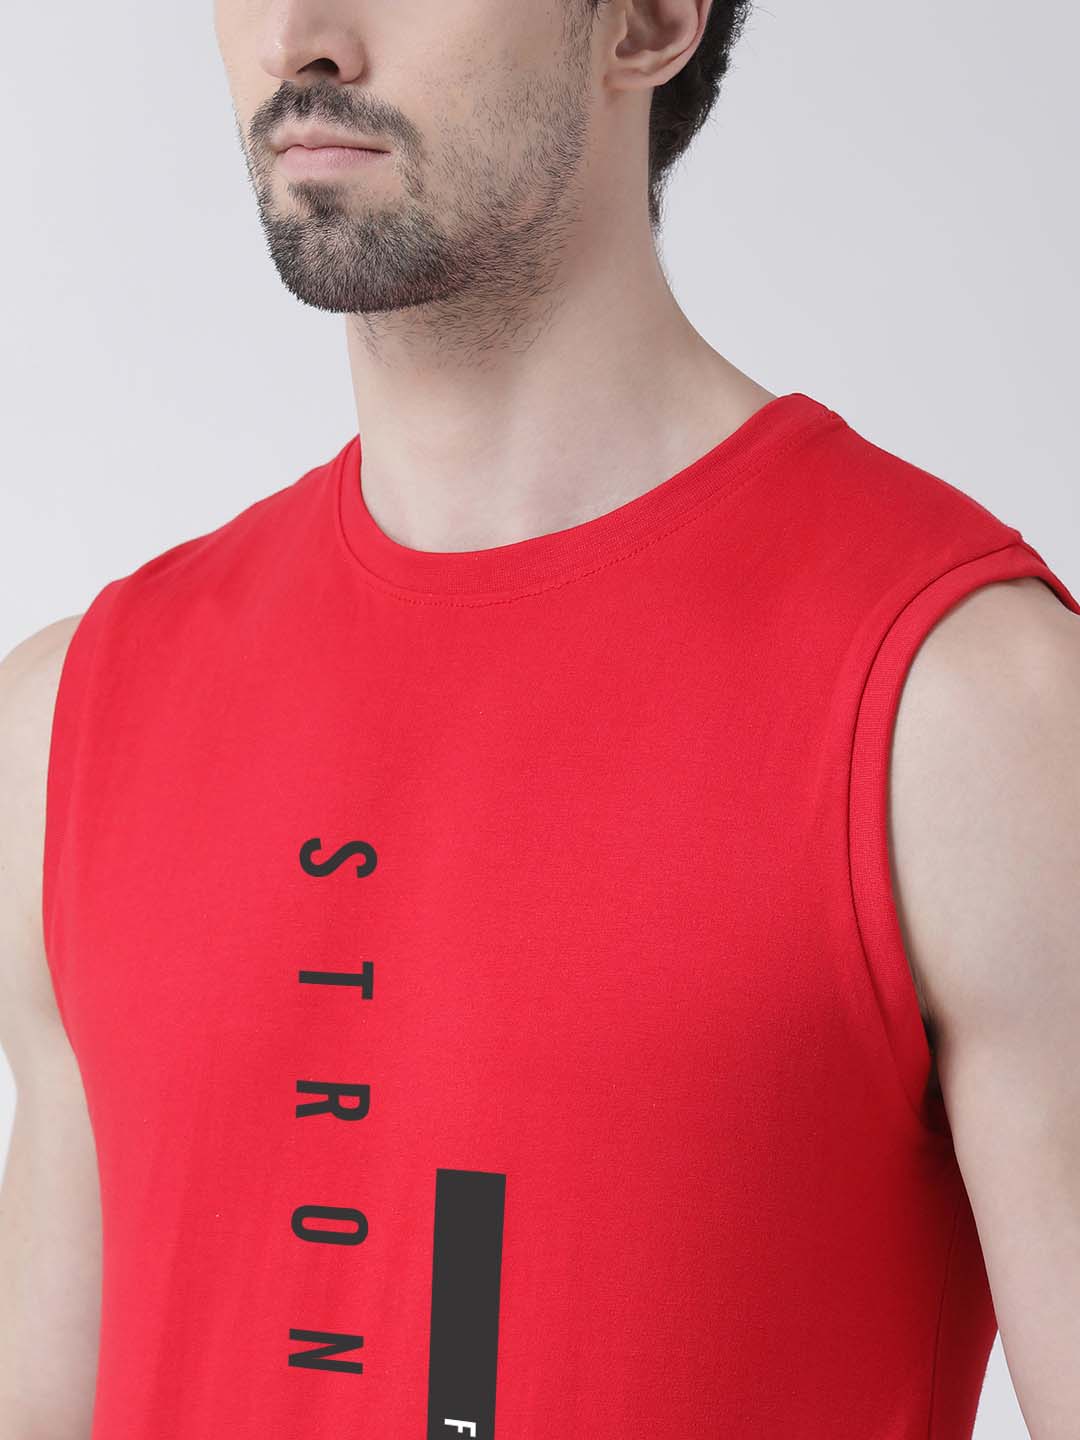 Men Strong Printed Cotton Gym Vest - Friskers